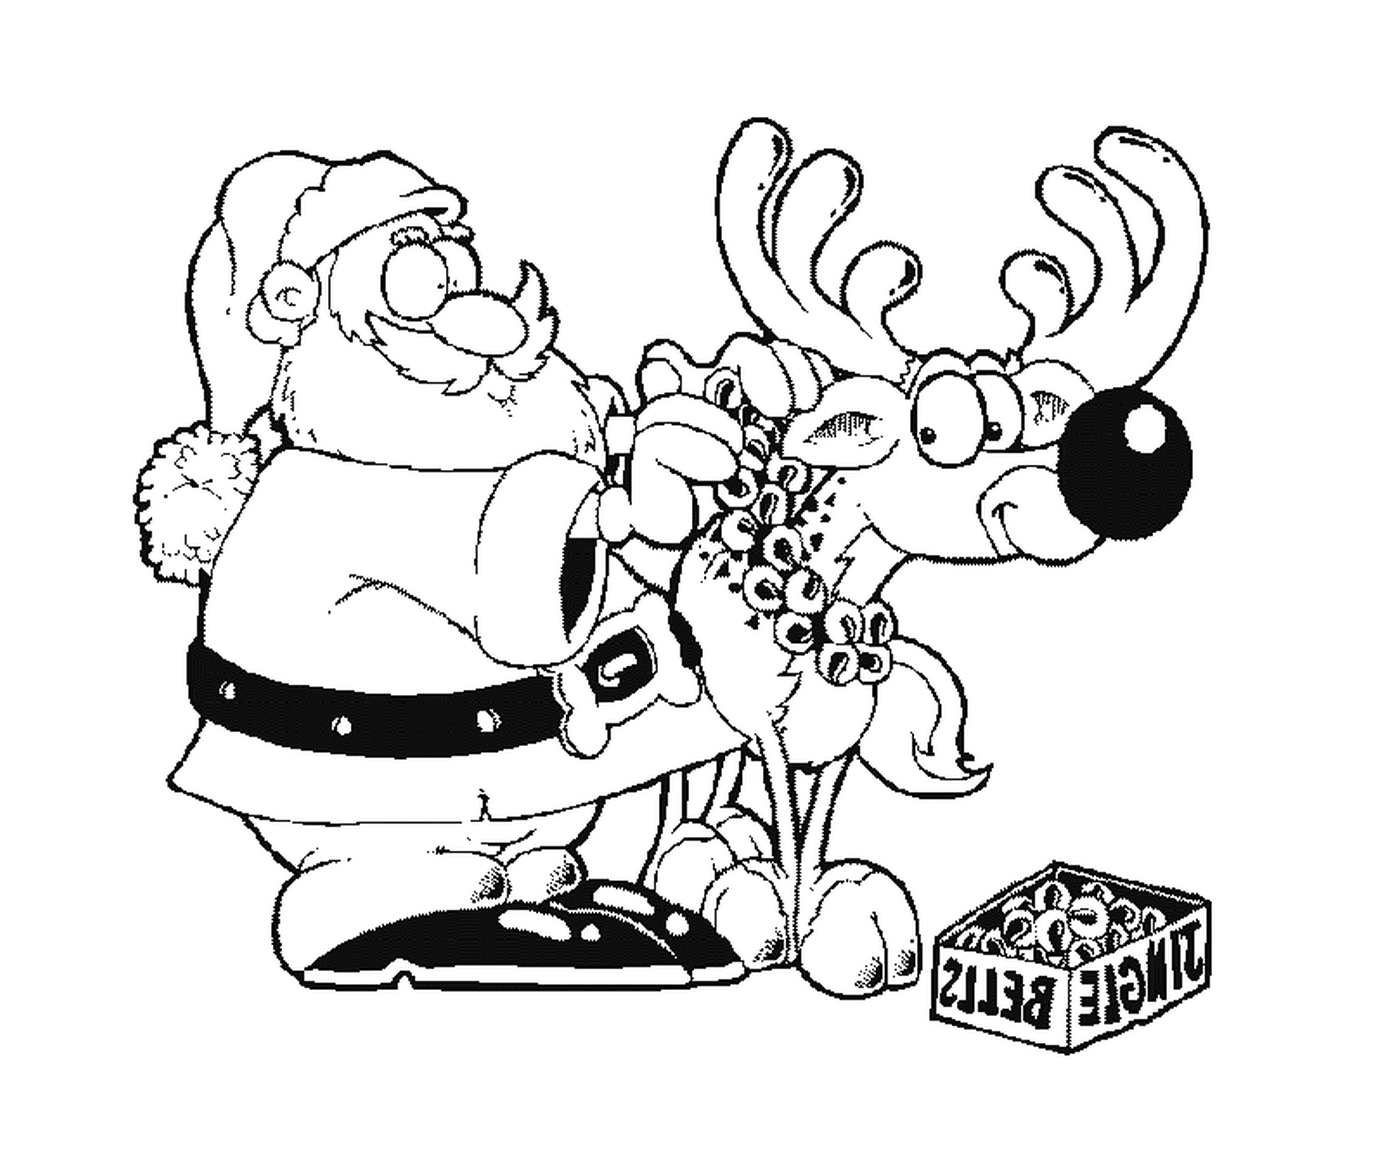  Santa Claus and a reindeer 